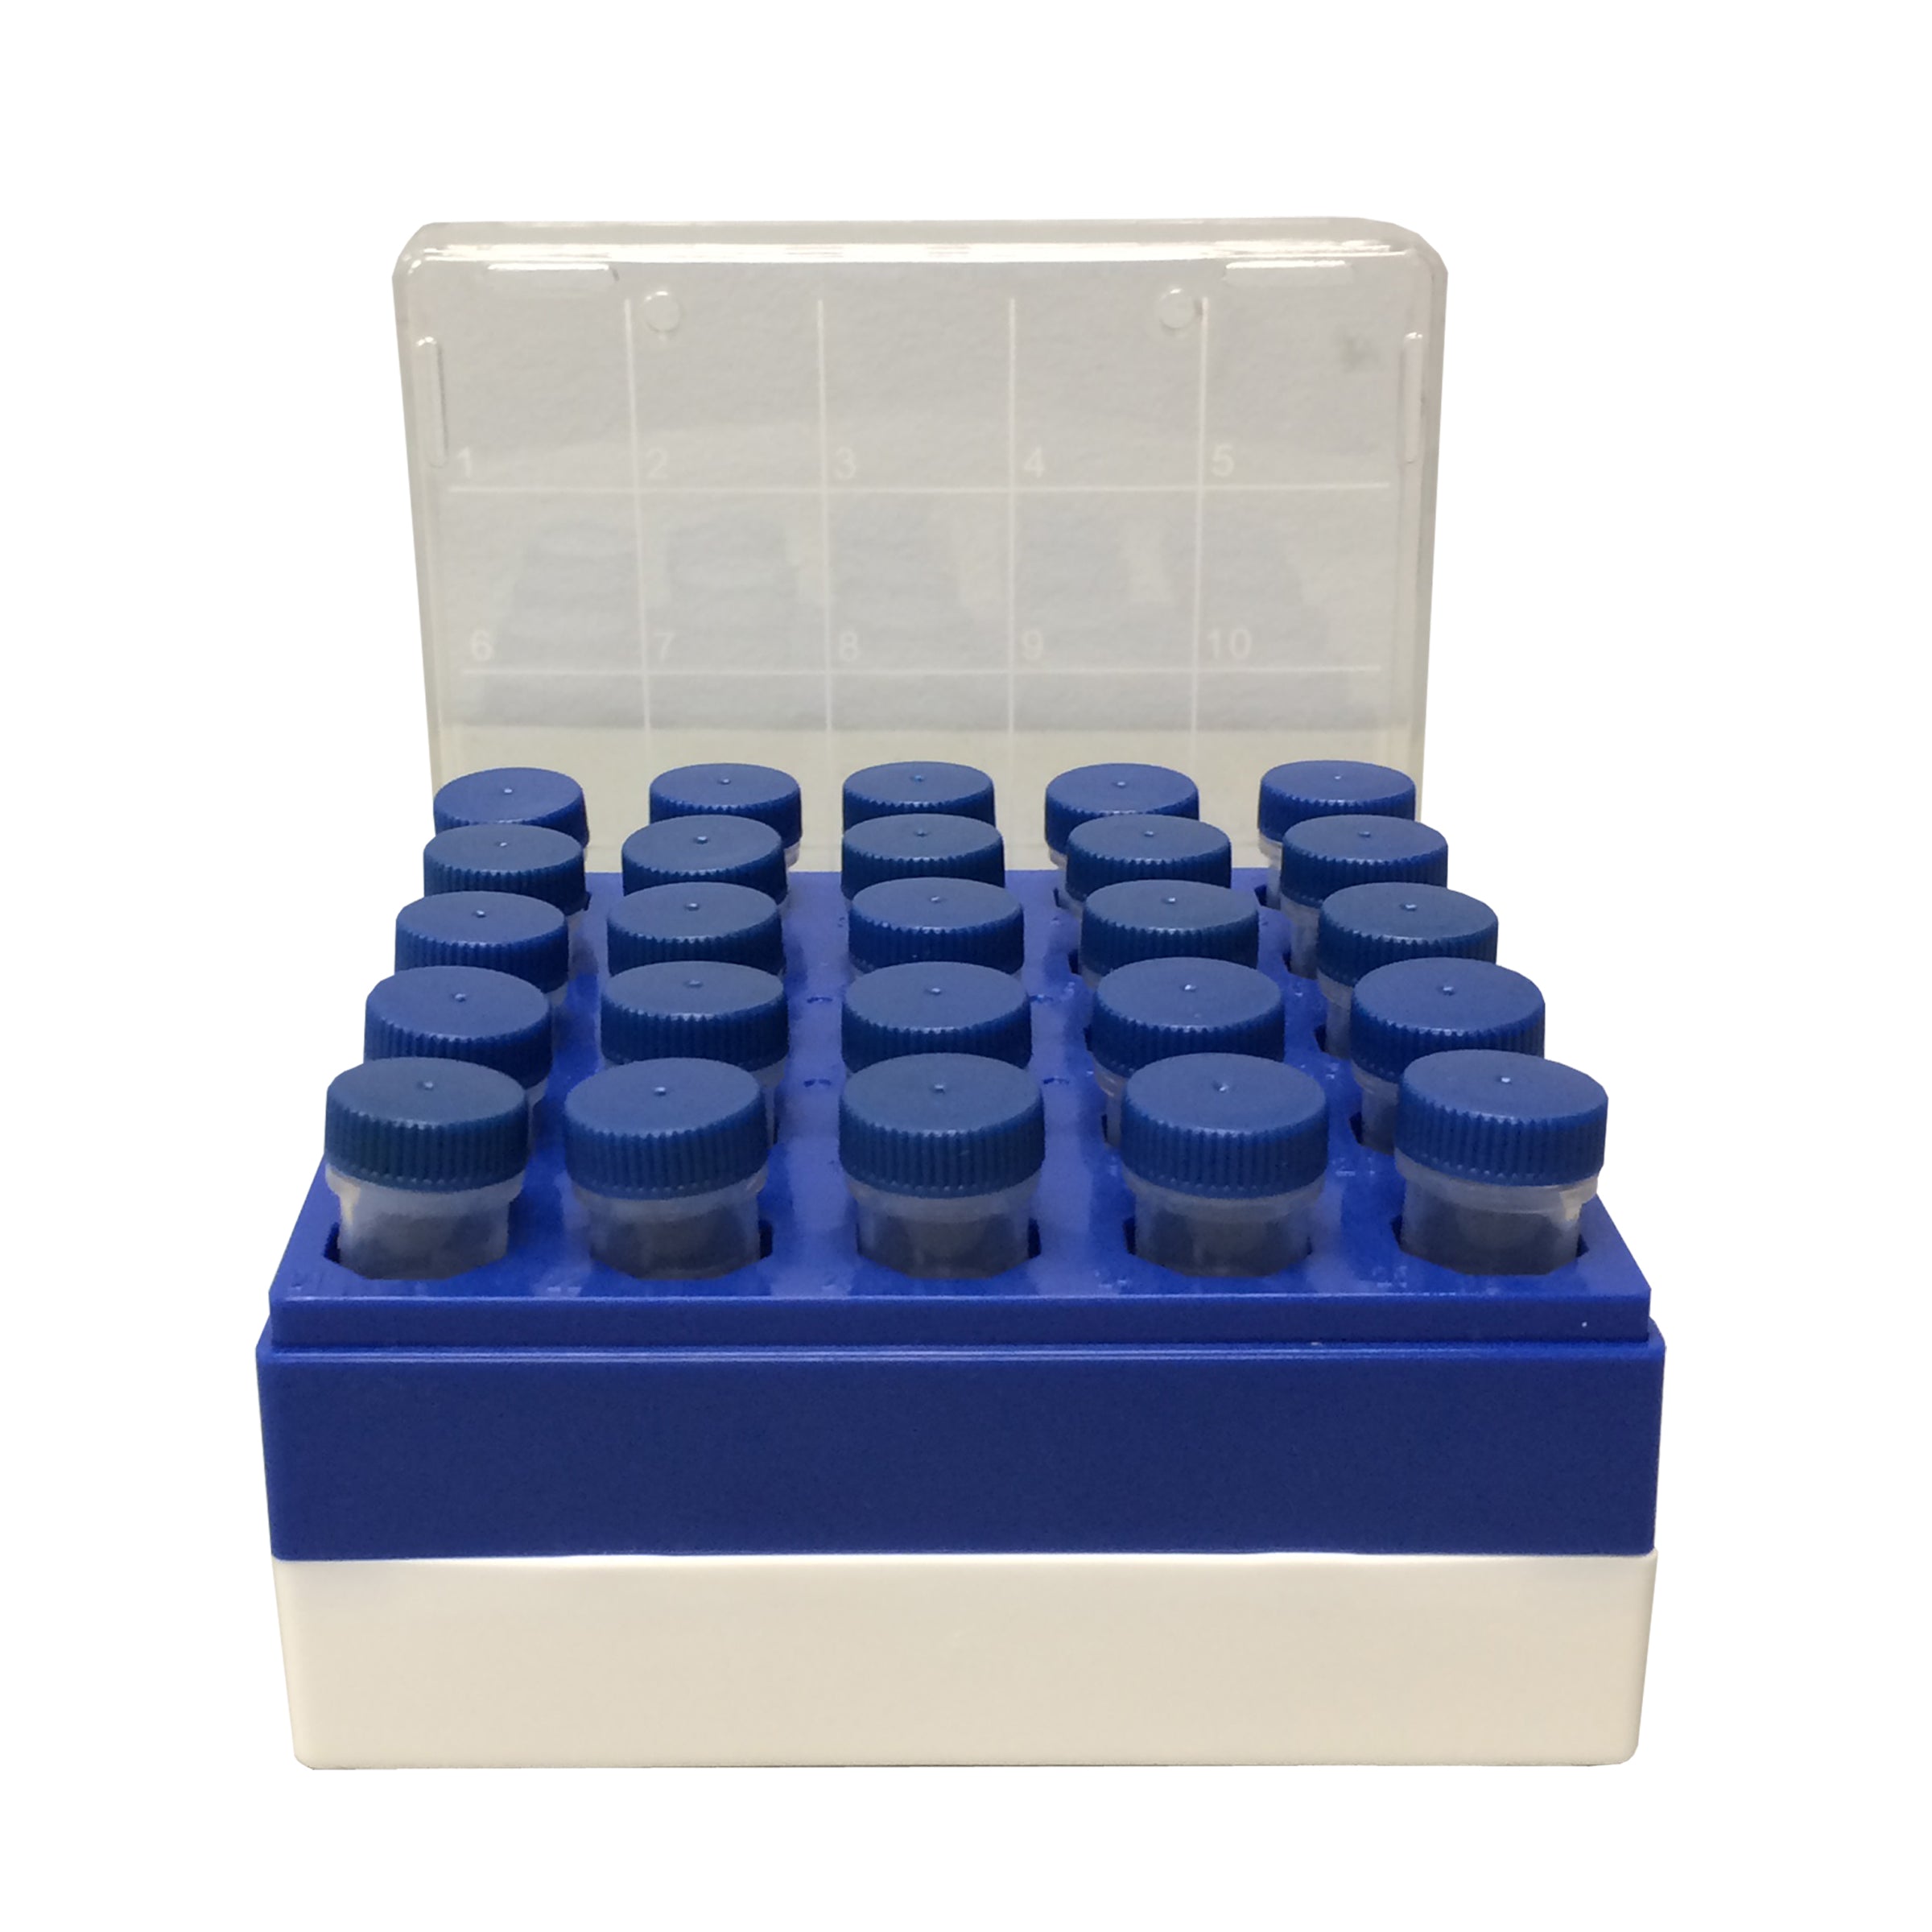 MTC Bio C2581, Freezer Box, Polycarbonate, for 25 (5x5) 5ml Tubes, 5/pk